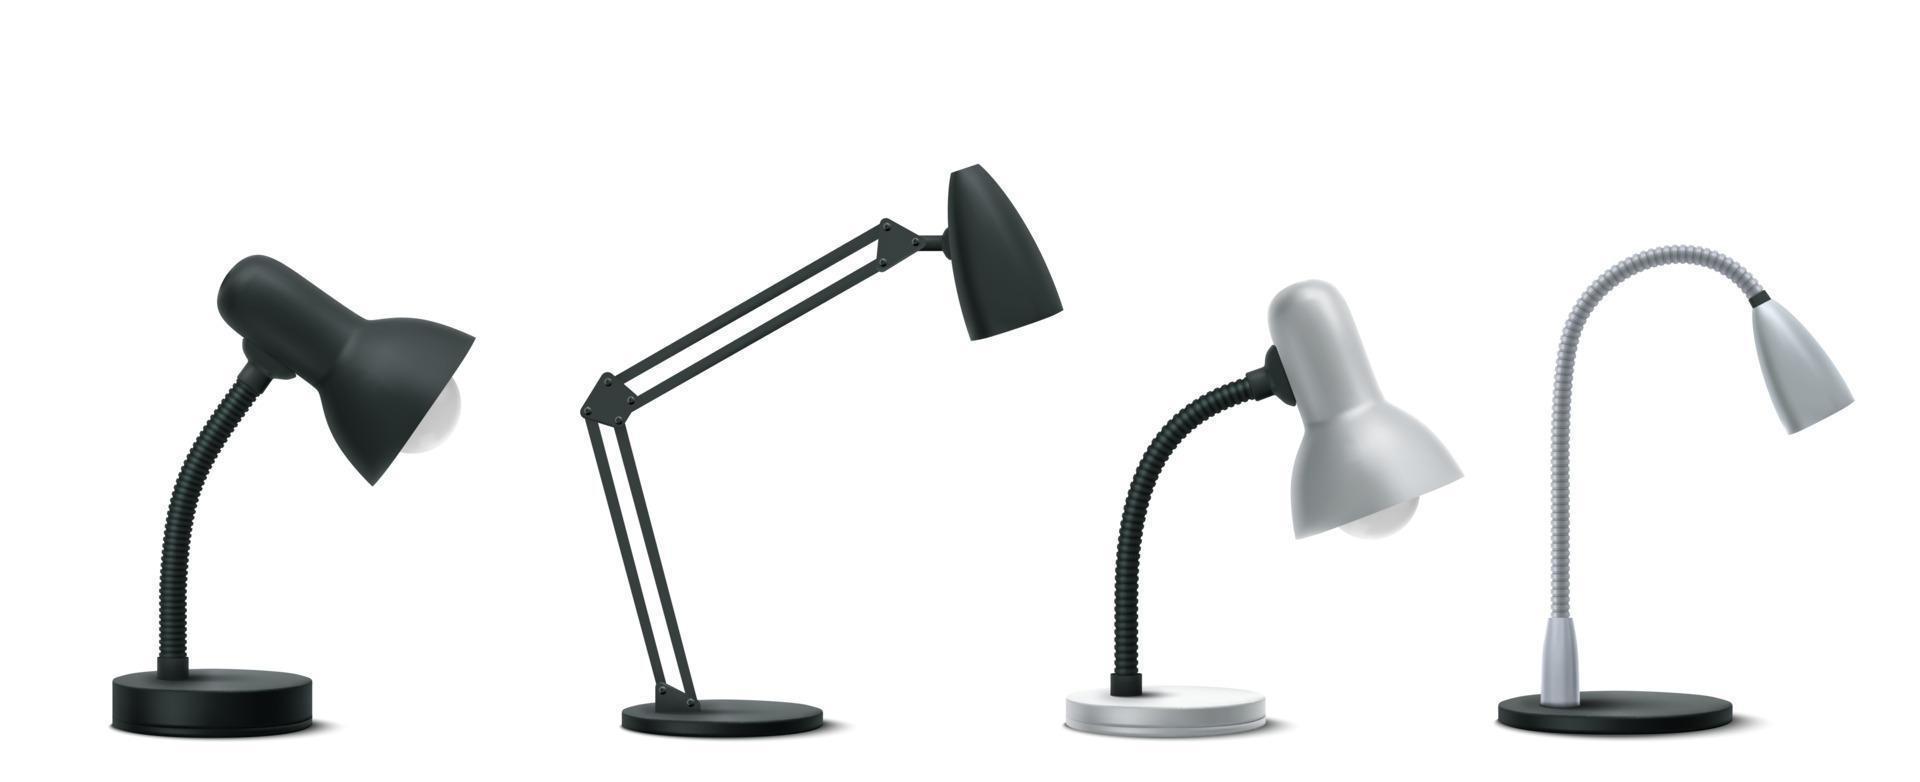 lámparas de mesa, luz eléctrica de escritorio para oficina vector